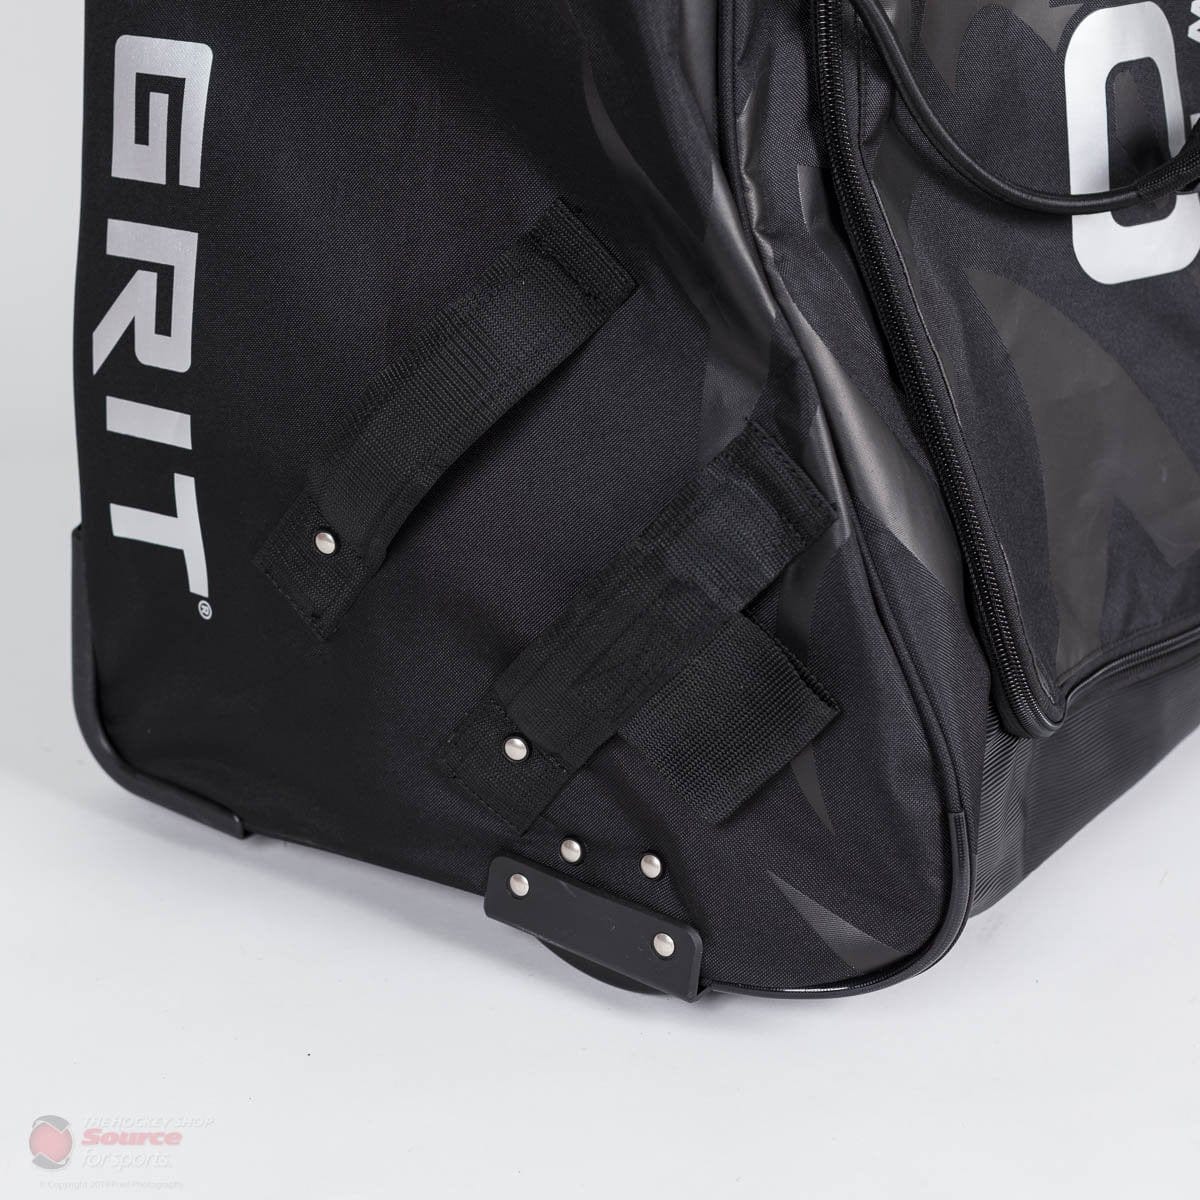 Grit GT4 Sumo Junior Tower Goalie Wheel Bag